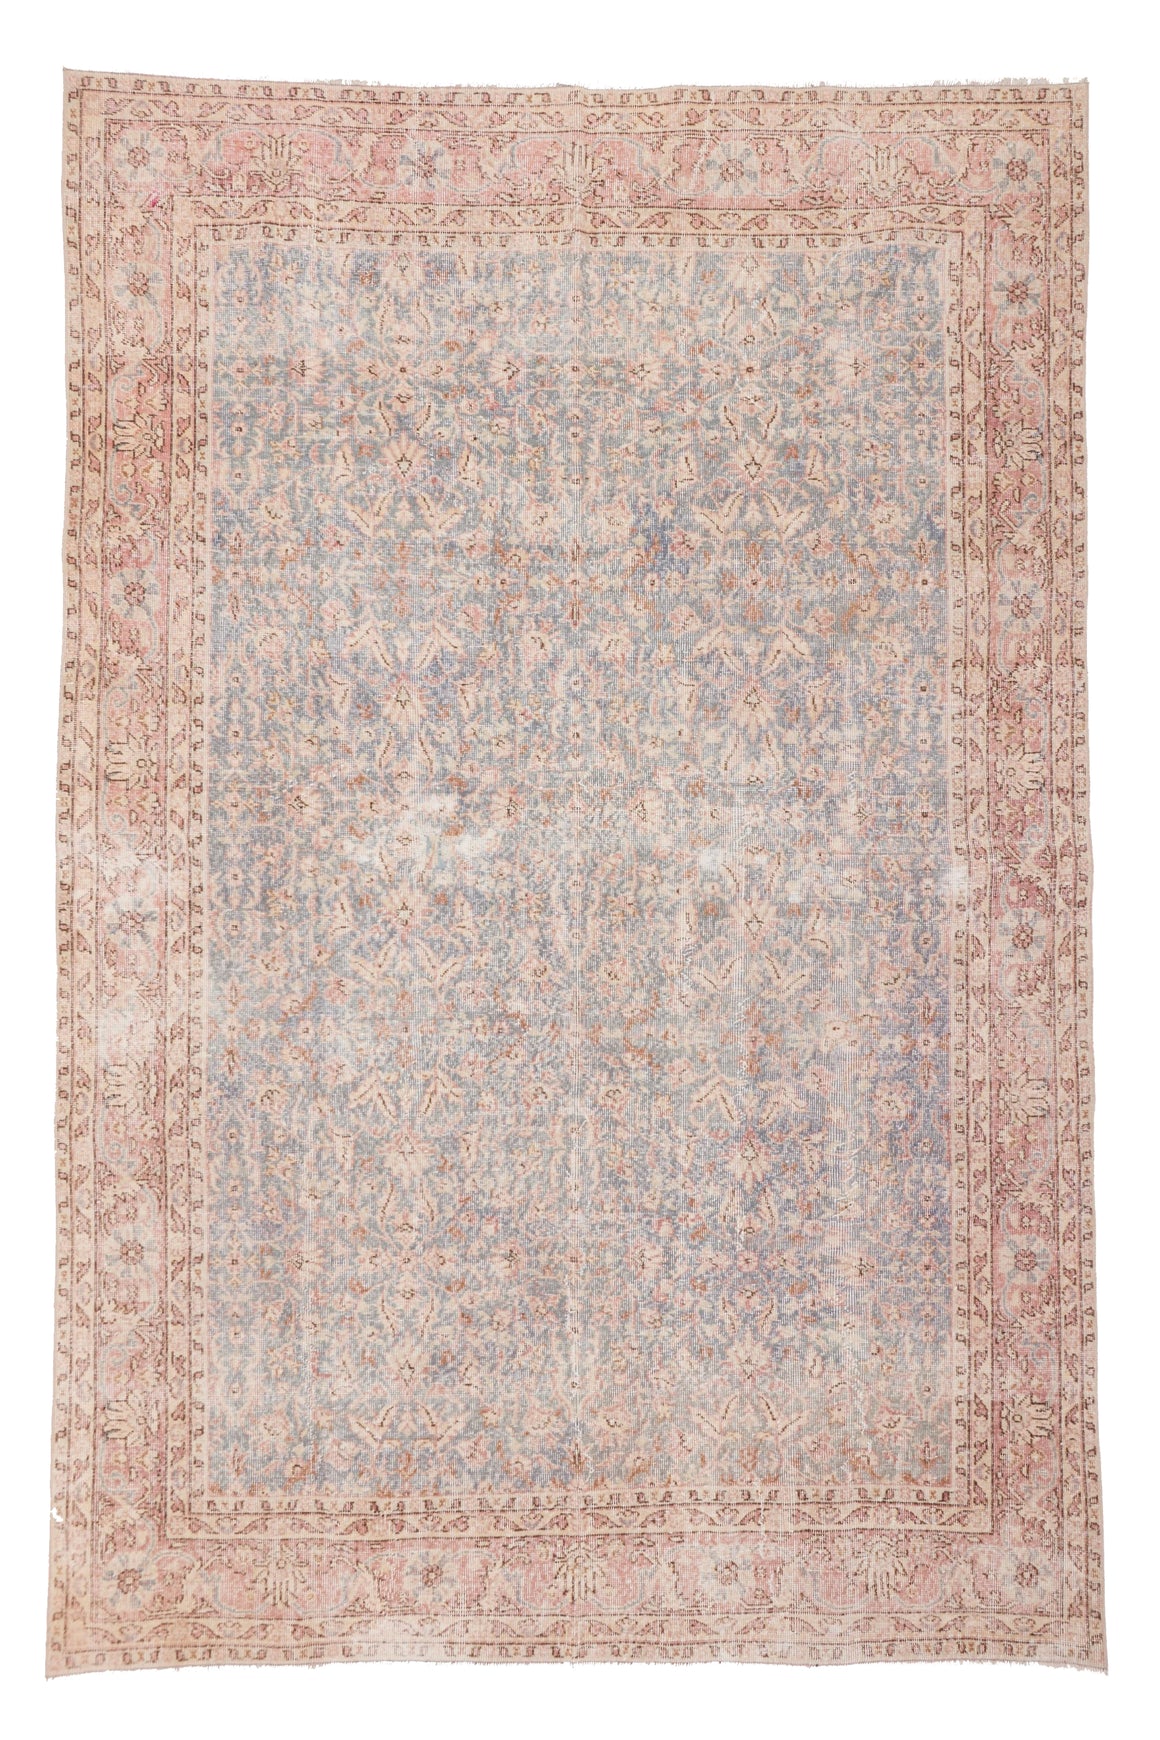 'Linden' Persian Vintage Area Rug- 6'9.5'' x 10'1''